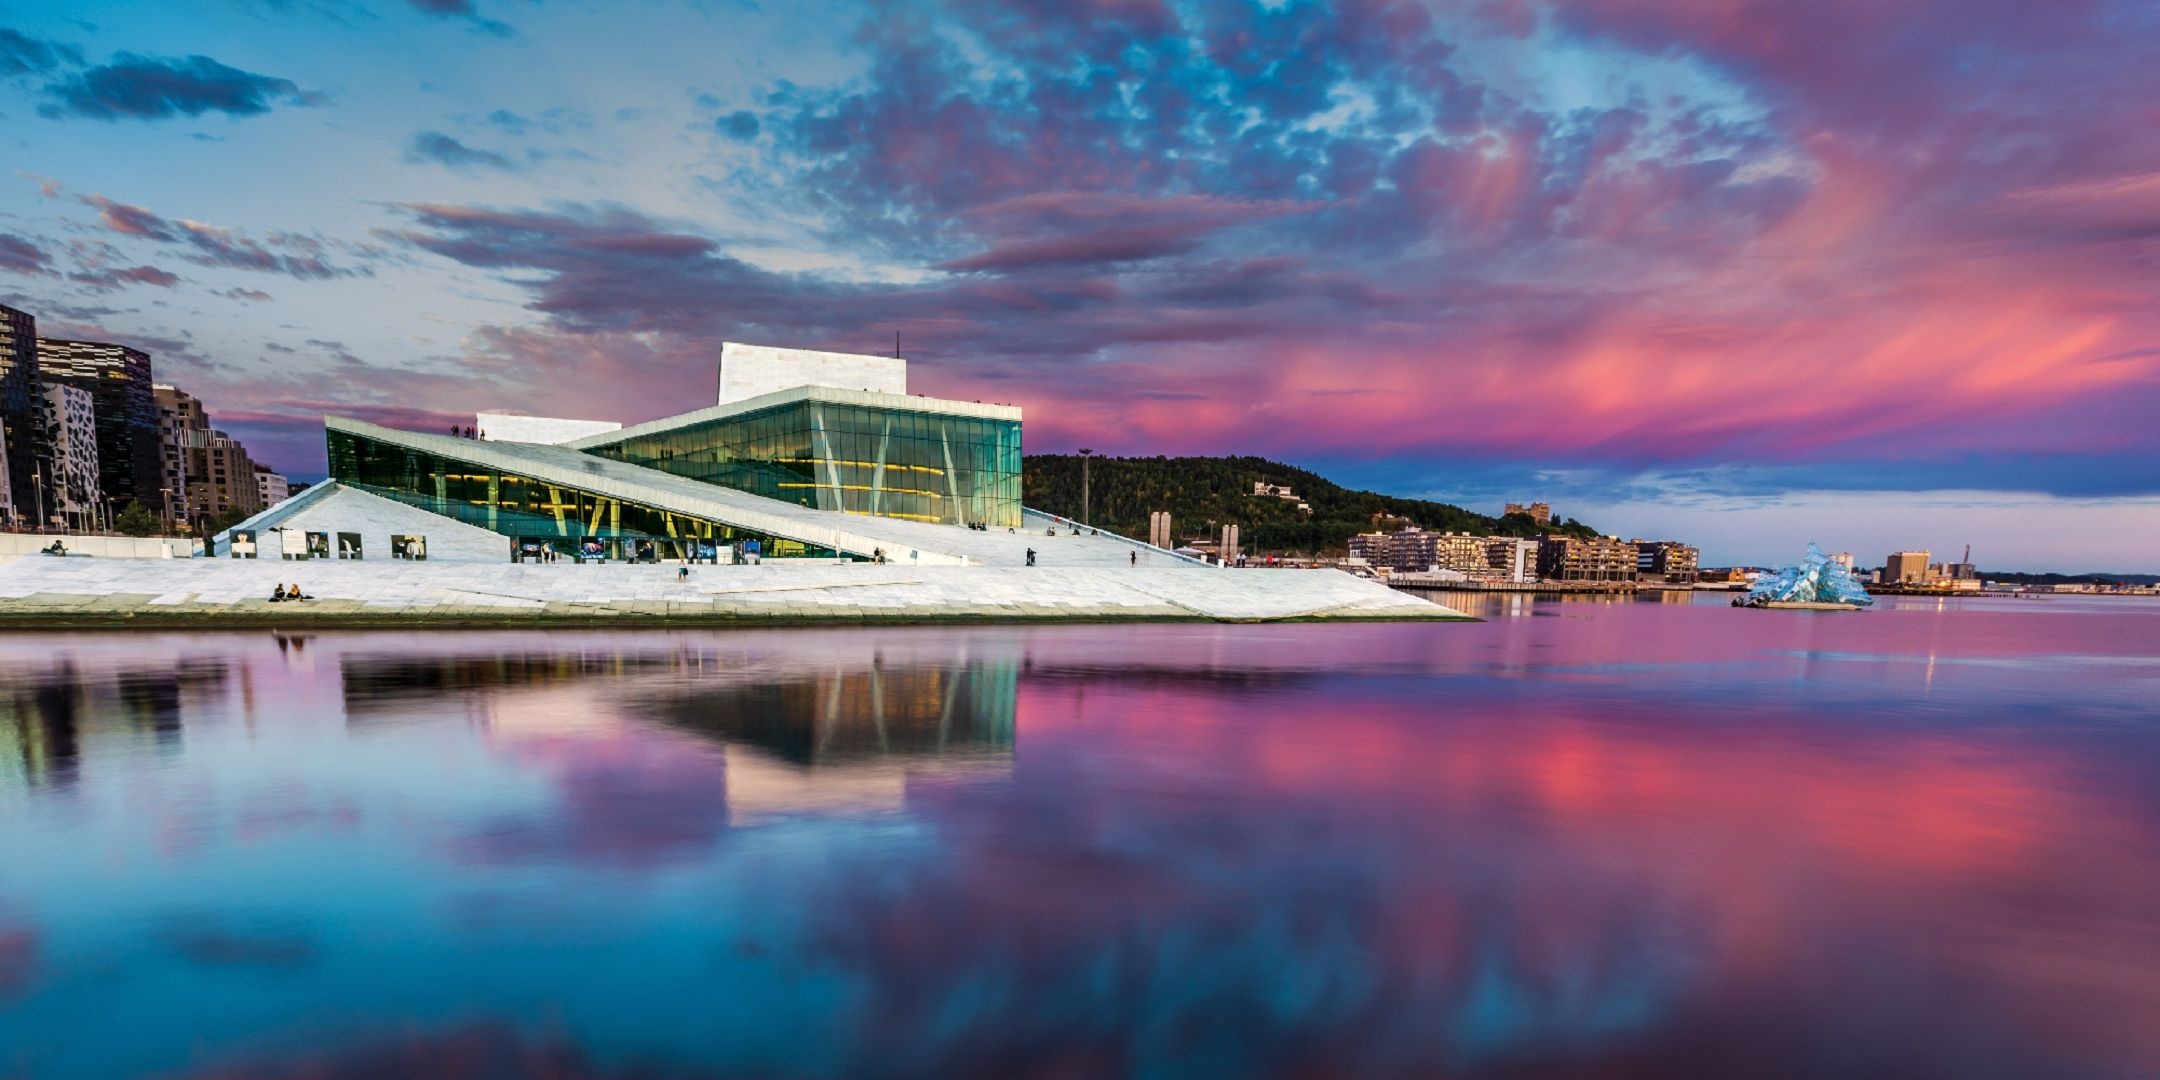 Oslo Opera House, High-quality wallpapers, 4K resolution, HD backgrounds, 2160x1080 Dual Screen Desktop